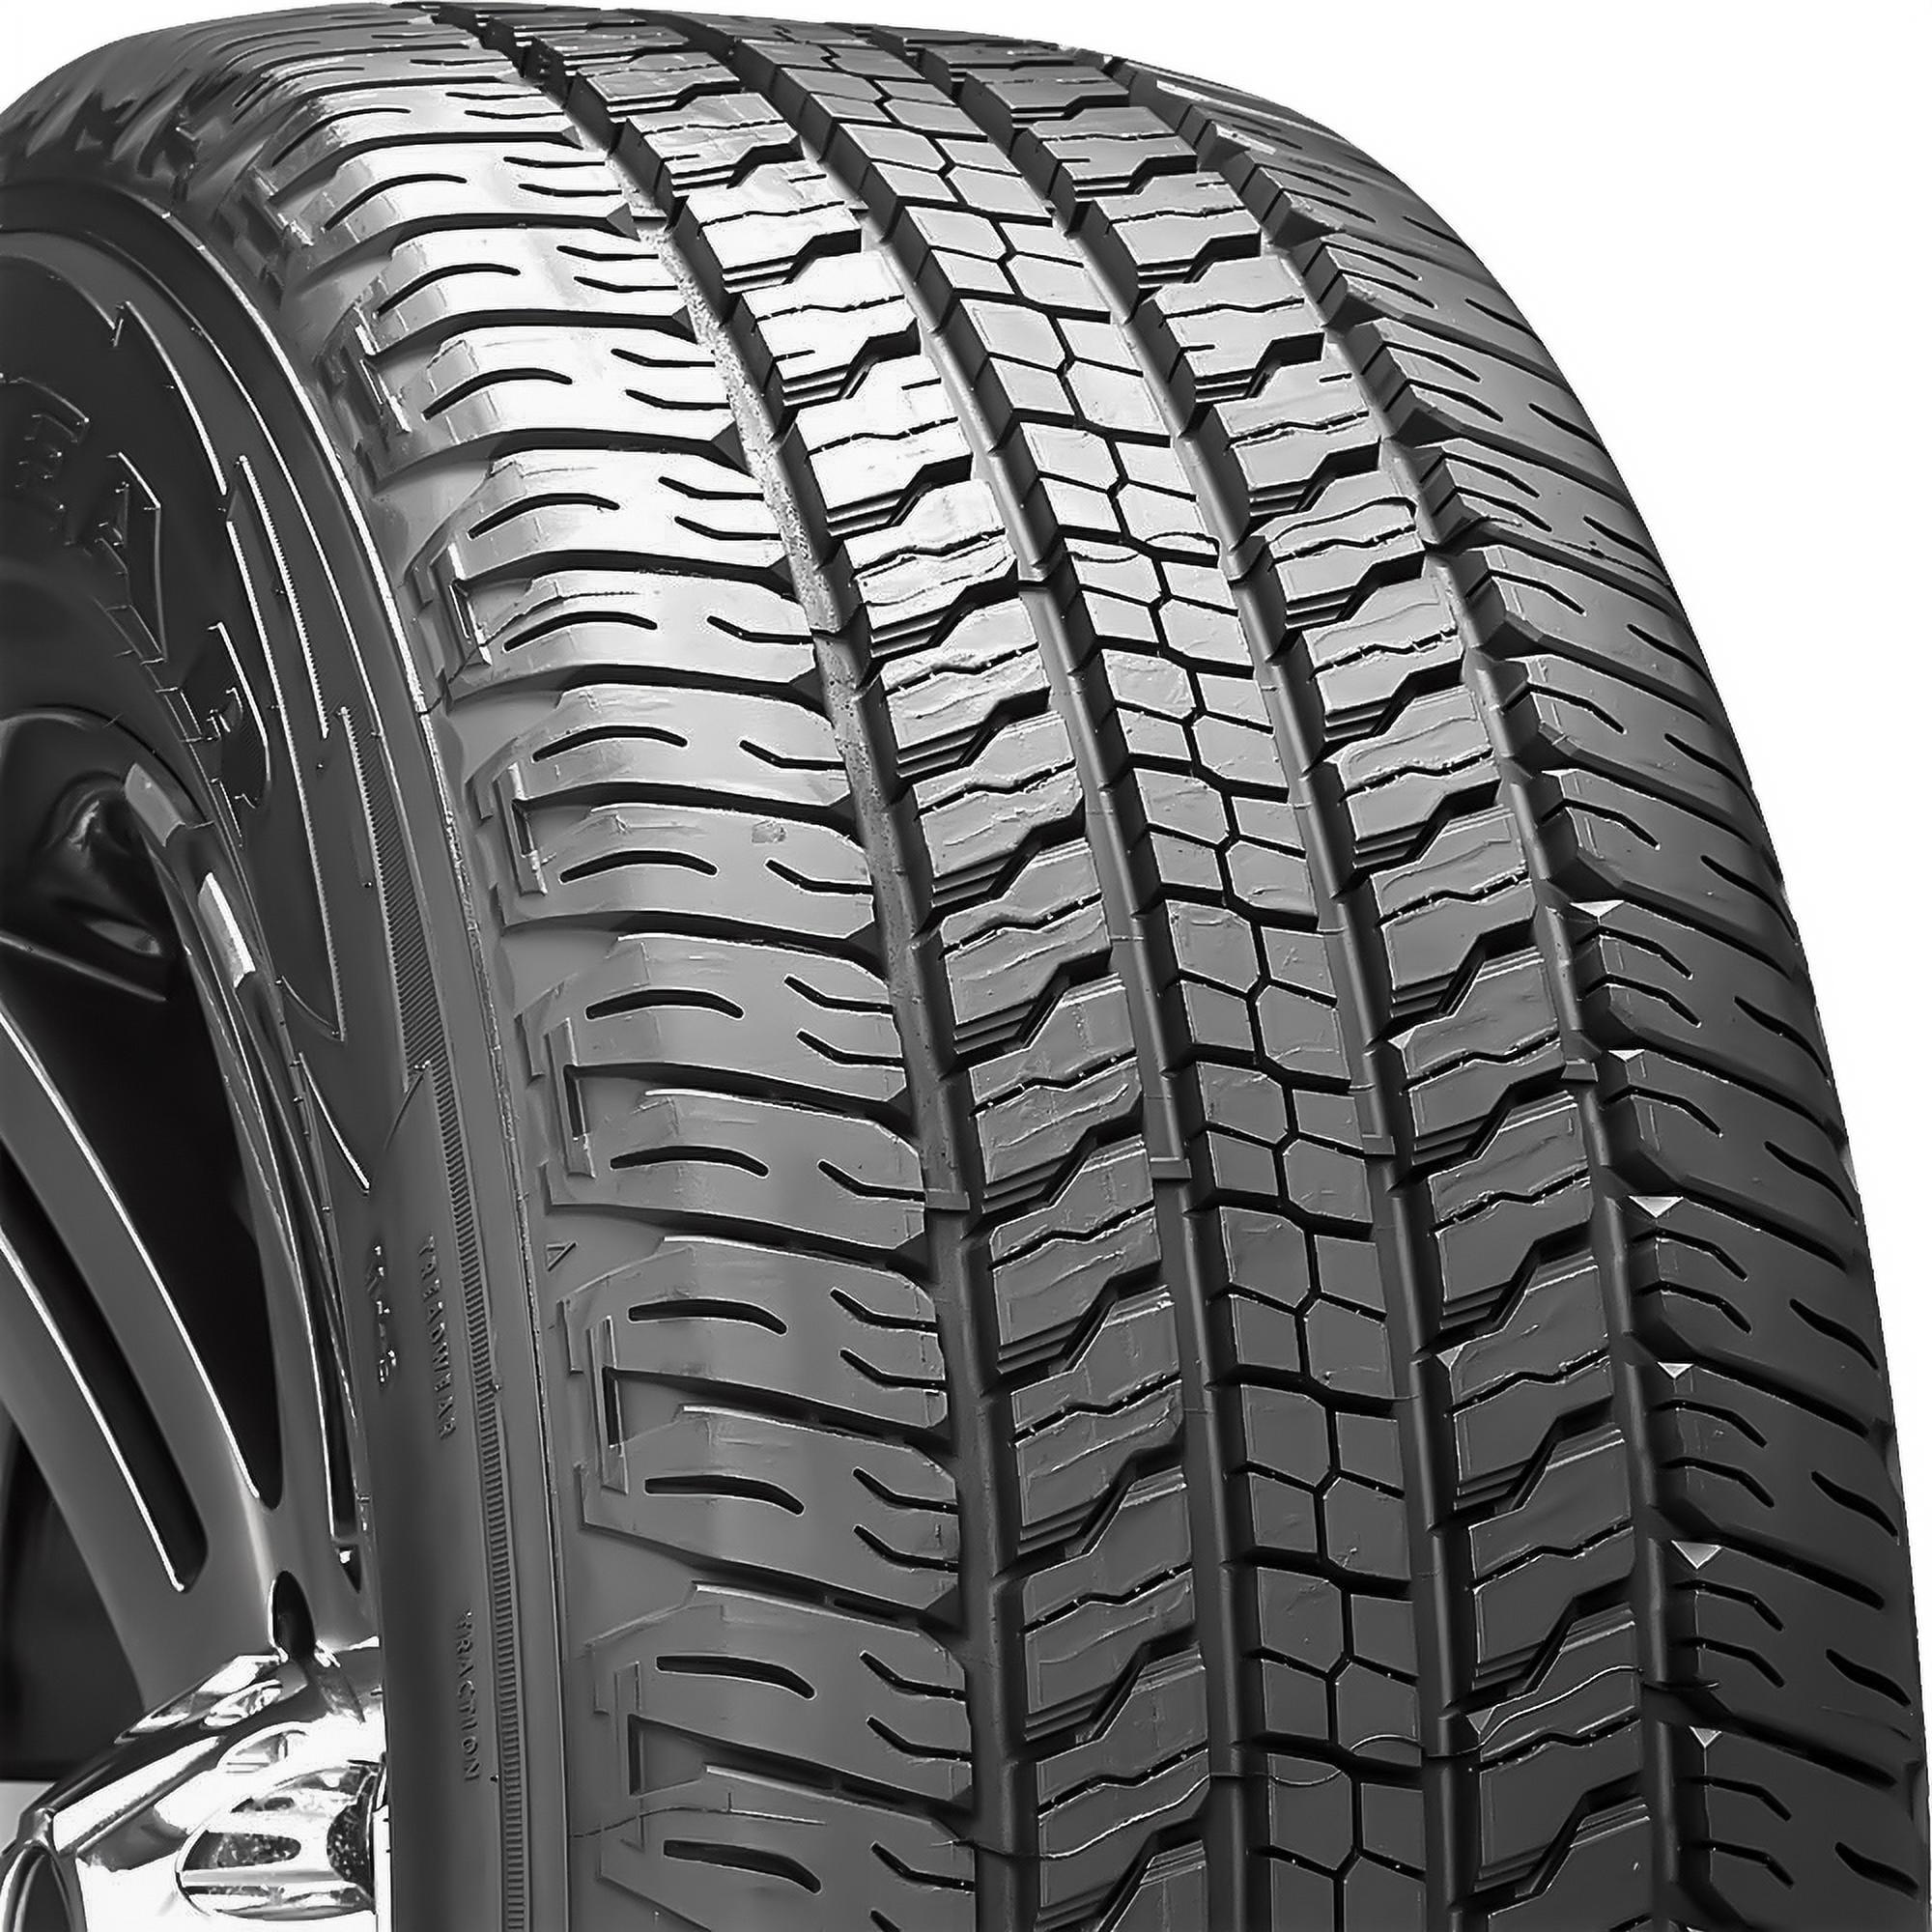 Goodyear Wrangler Fortitude HT 235/75R16 112T XL A/S All Season Tire